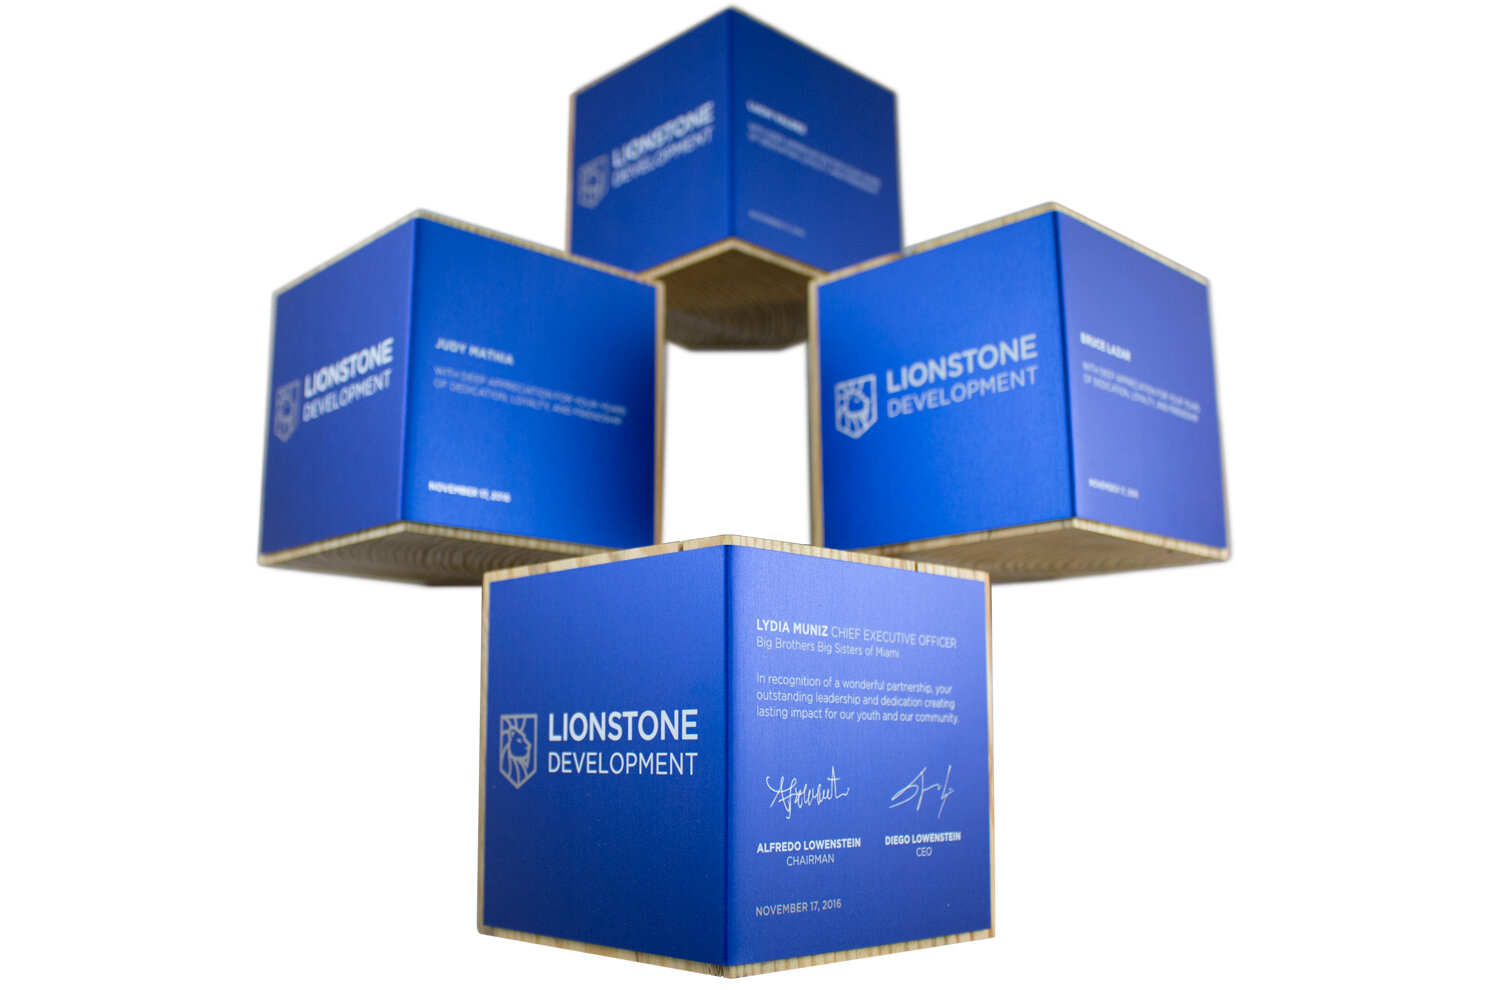 lionstone development awards wooden cube design trophies